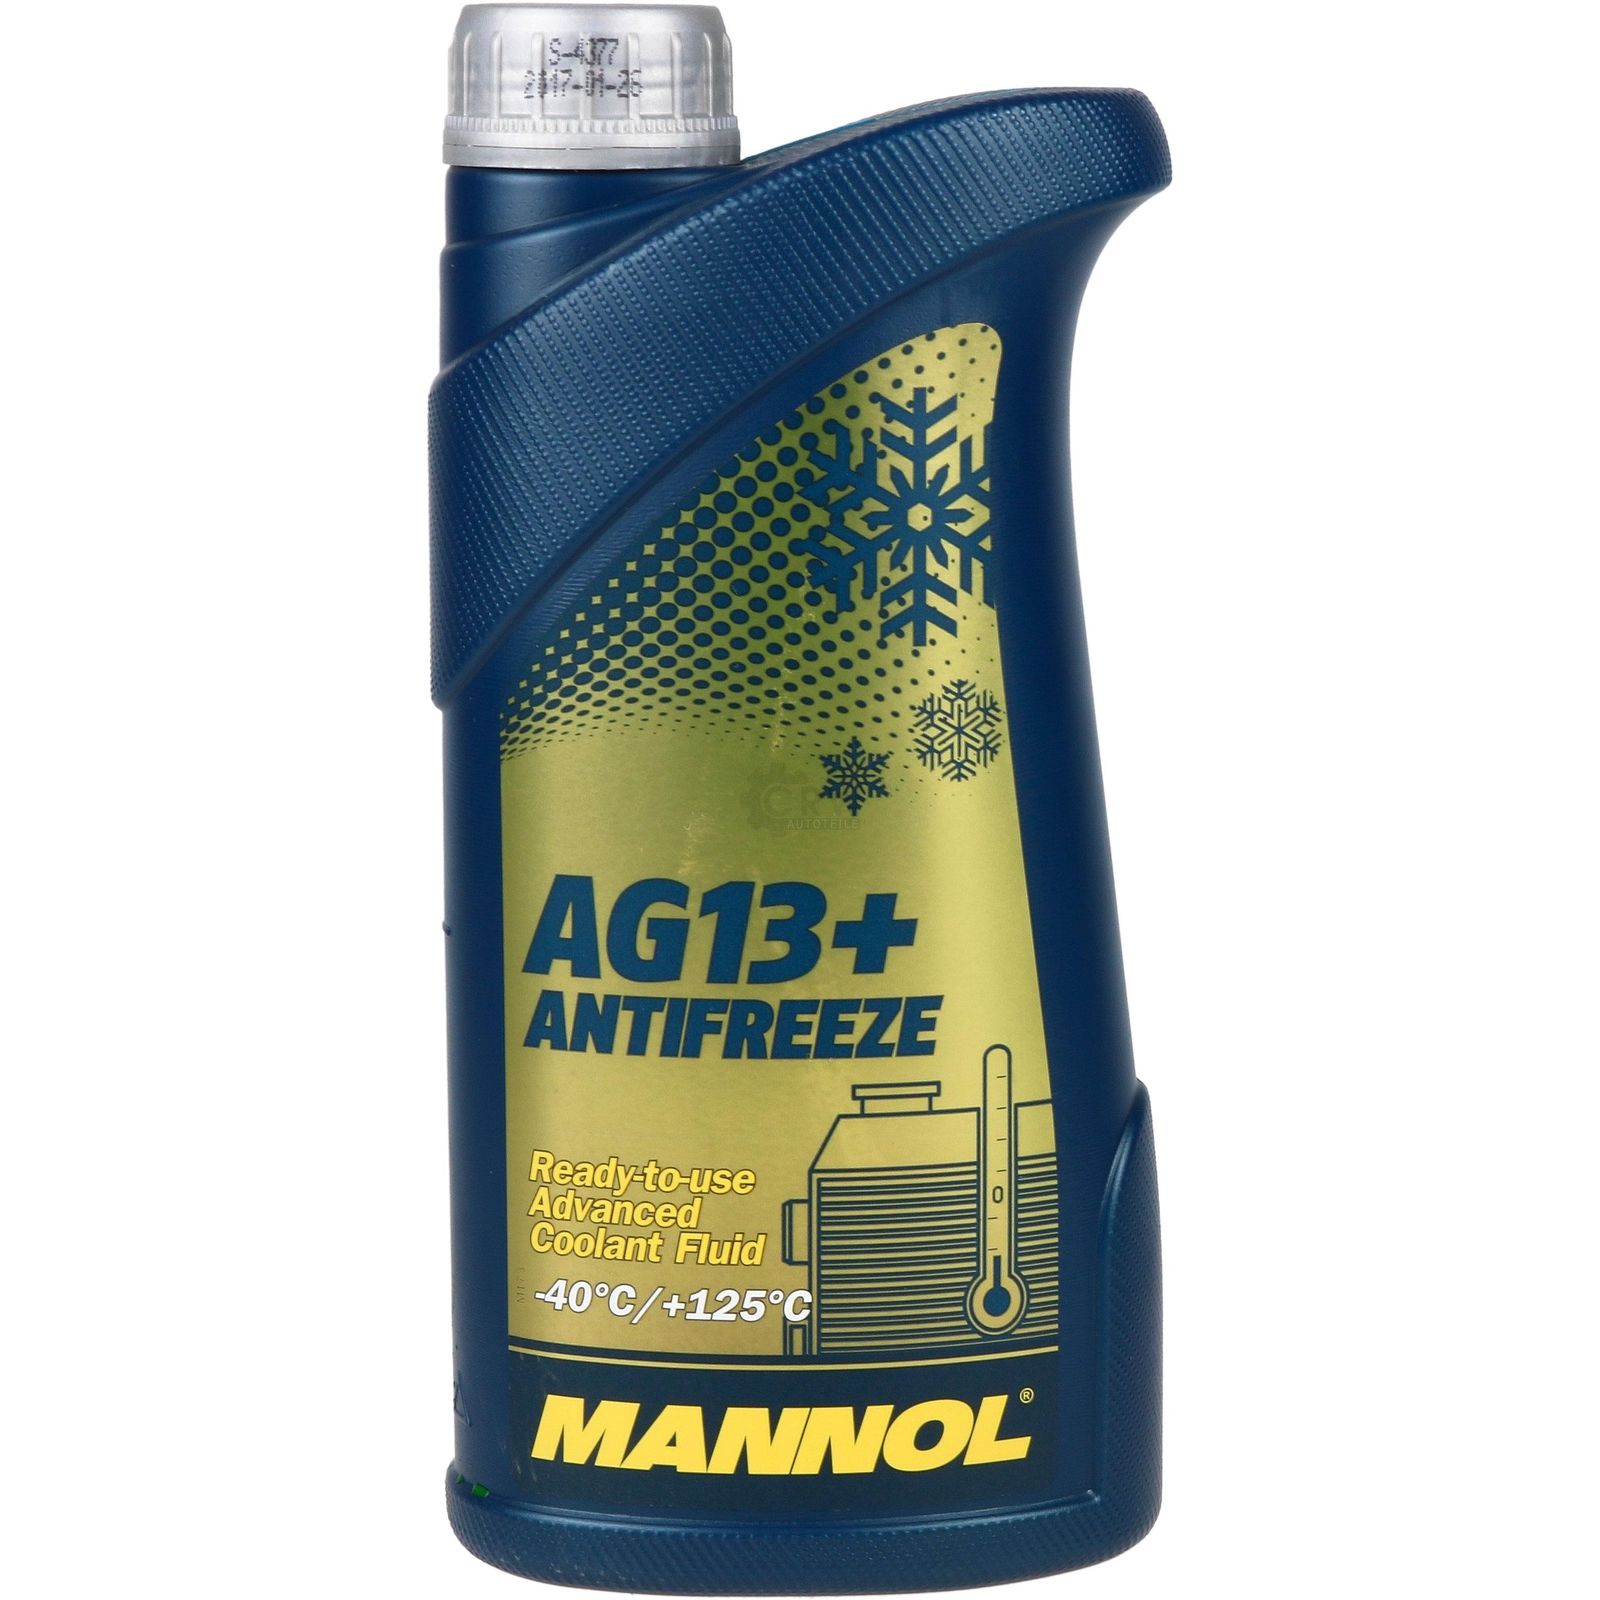 Mannol 4036021157818 Antifreeze ADVANCED ANTIFREEZE AG13+, -40°C, 1L 4036021157818